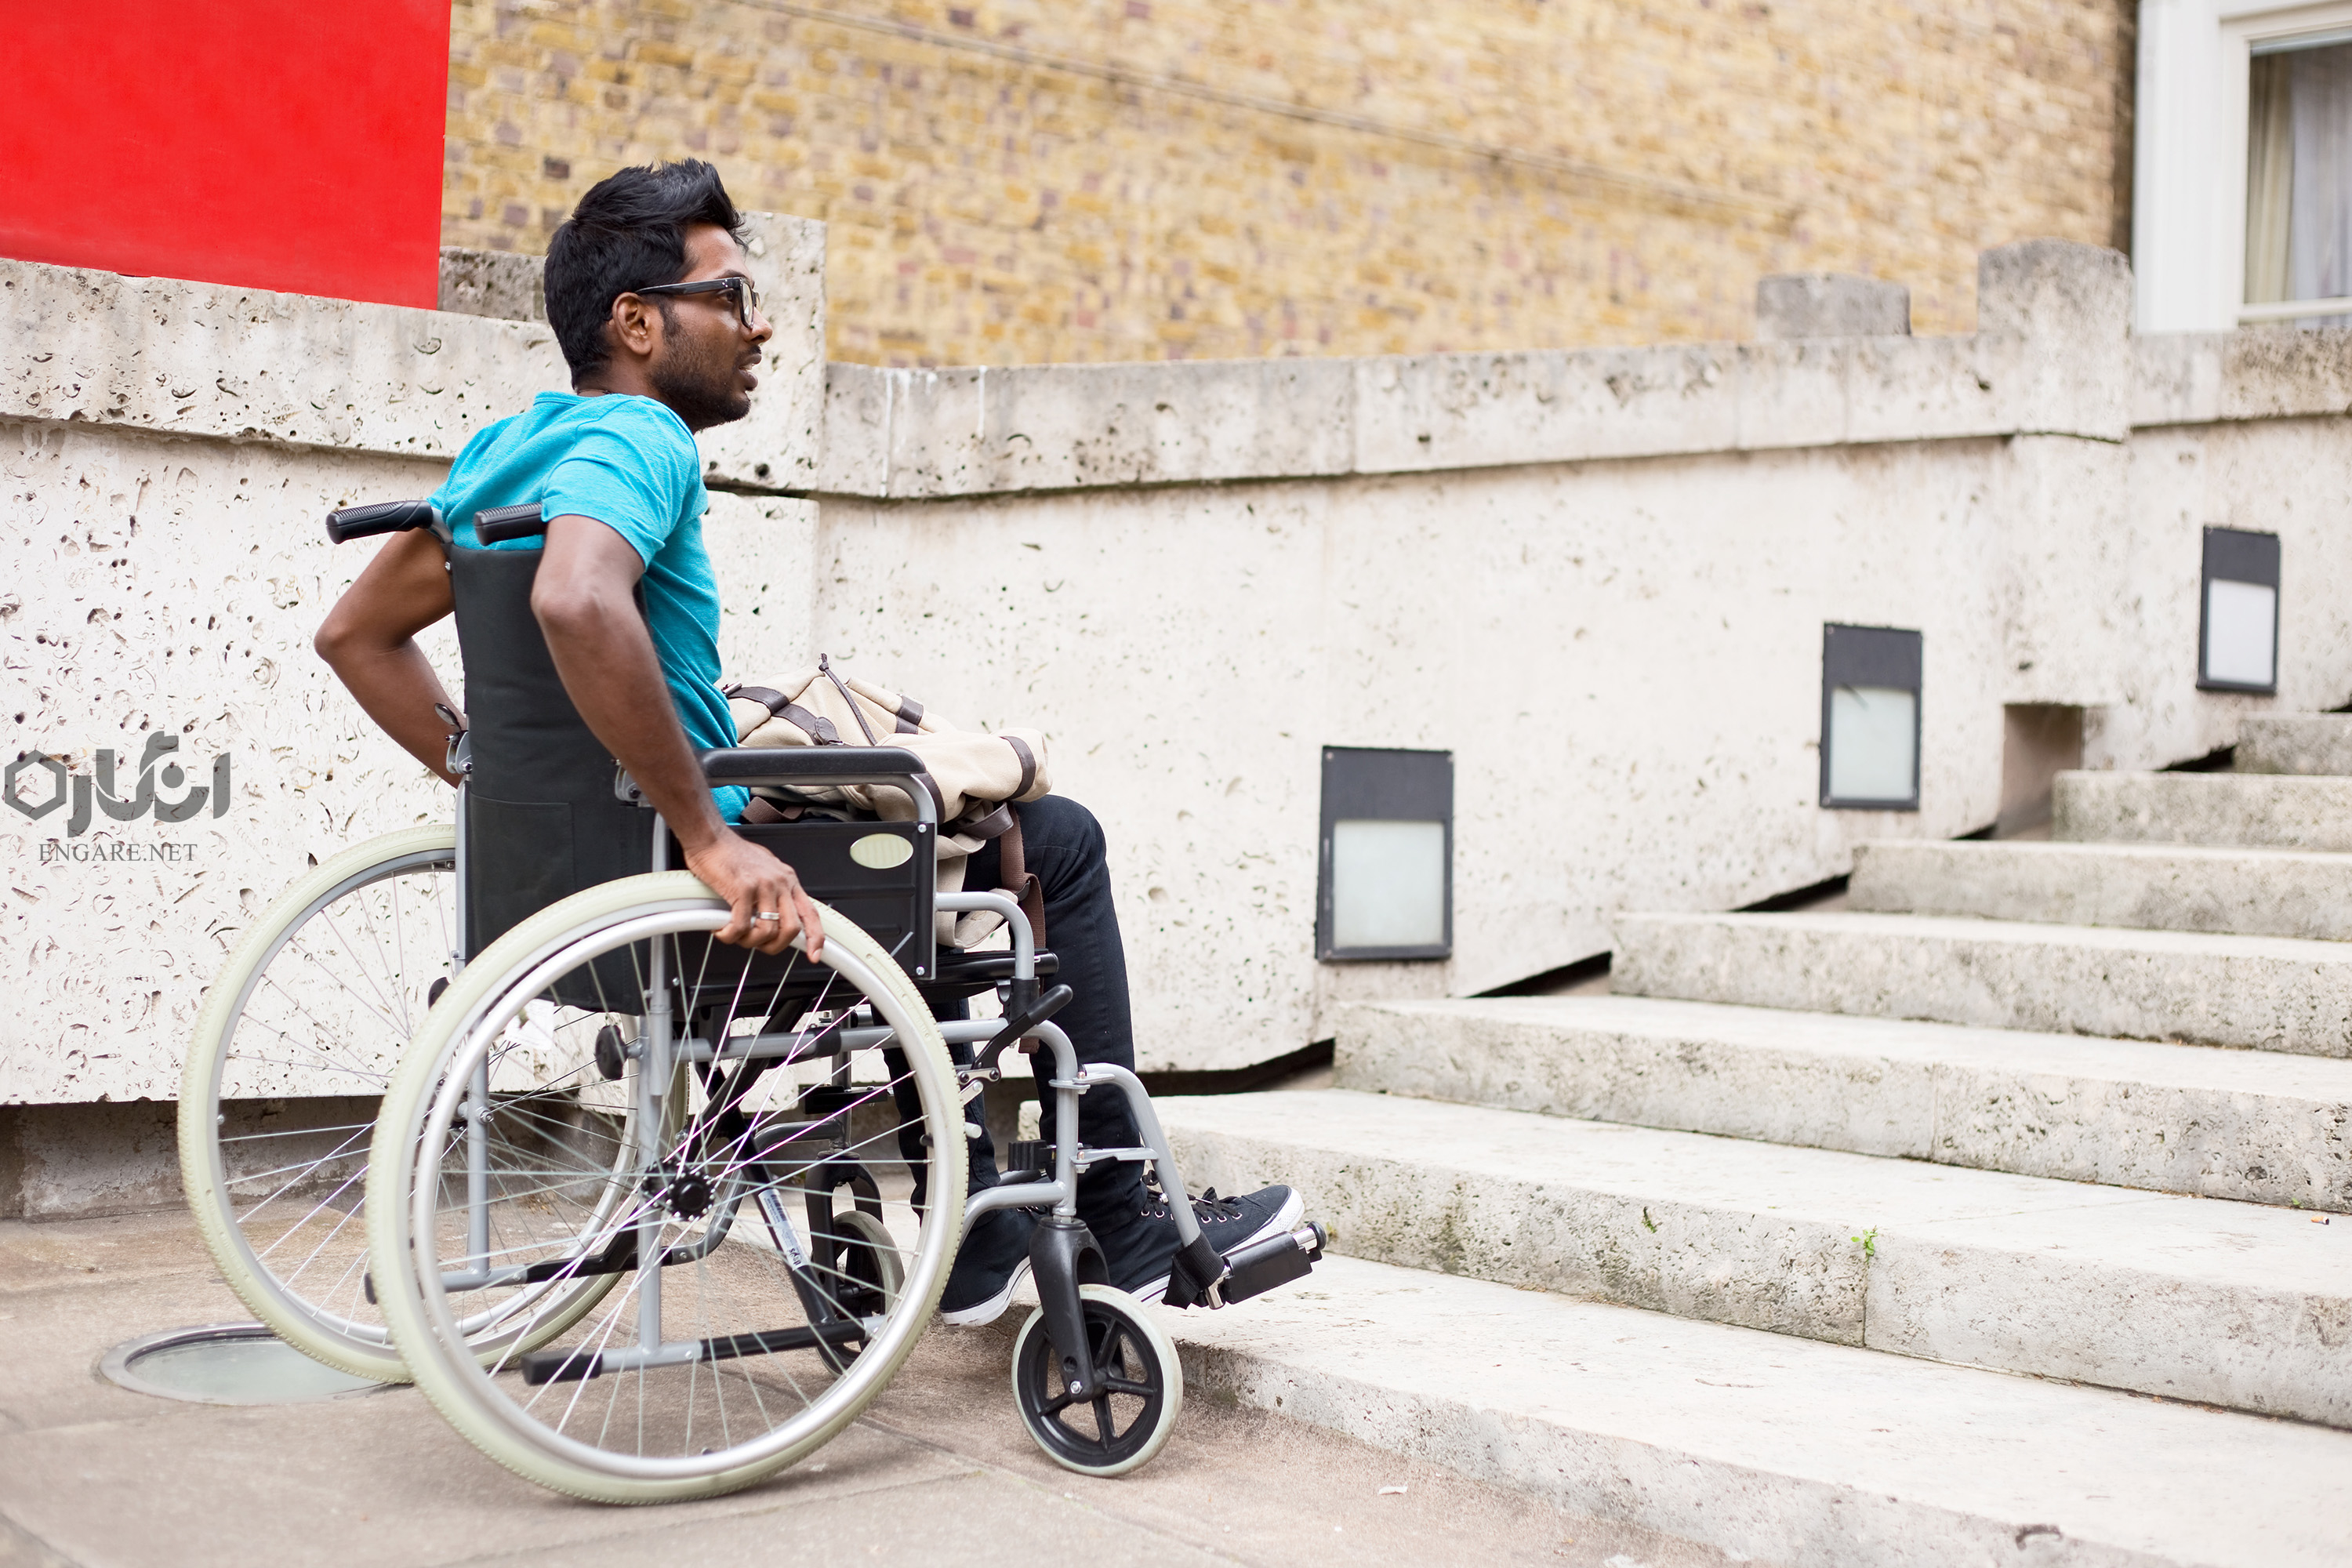 wheelchair man struggling with steps - از طرد اجتماعی تا مشارکت کامل یک جامعه - نابرابری اجتماعی, معلولیت چیست, معلولیت, معلول, طرد اجتماعی, سیستم حمل و نقل, رفاه, دسترسی به مسکن, دسترسی به آموزش, حقوق اساسی, تعریف مهاجرت, تعریف معلولیت, تاثیر جمعه بر معلول, برابری فرصت, آموزش, آزادی